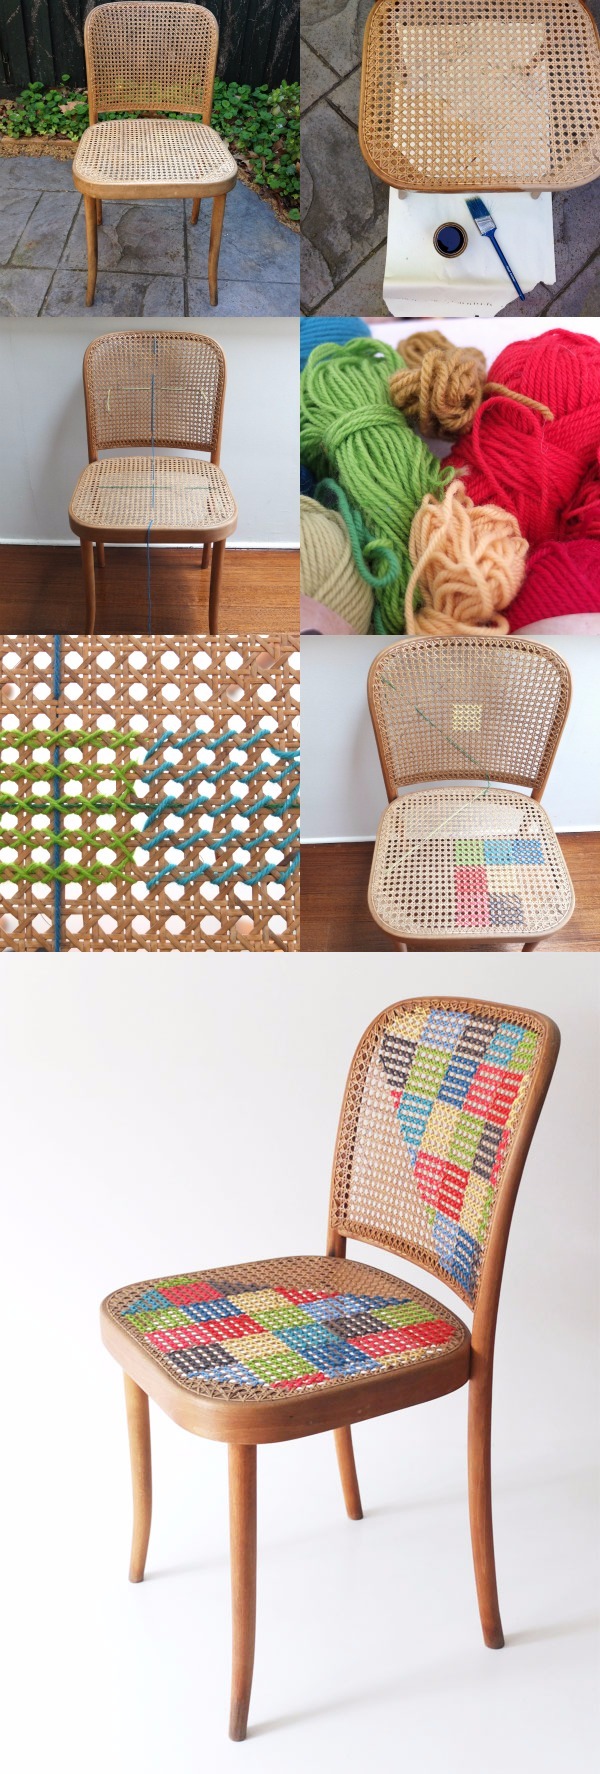 DIY Cross Stitch Chair